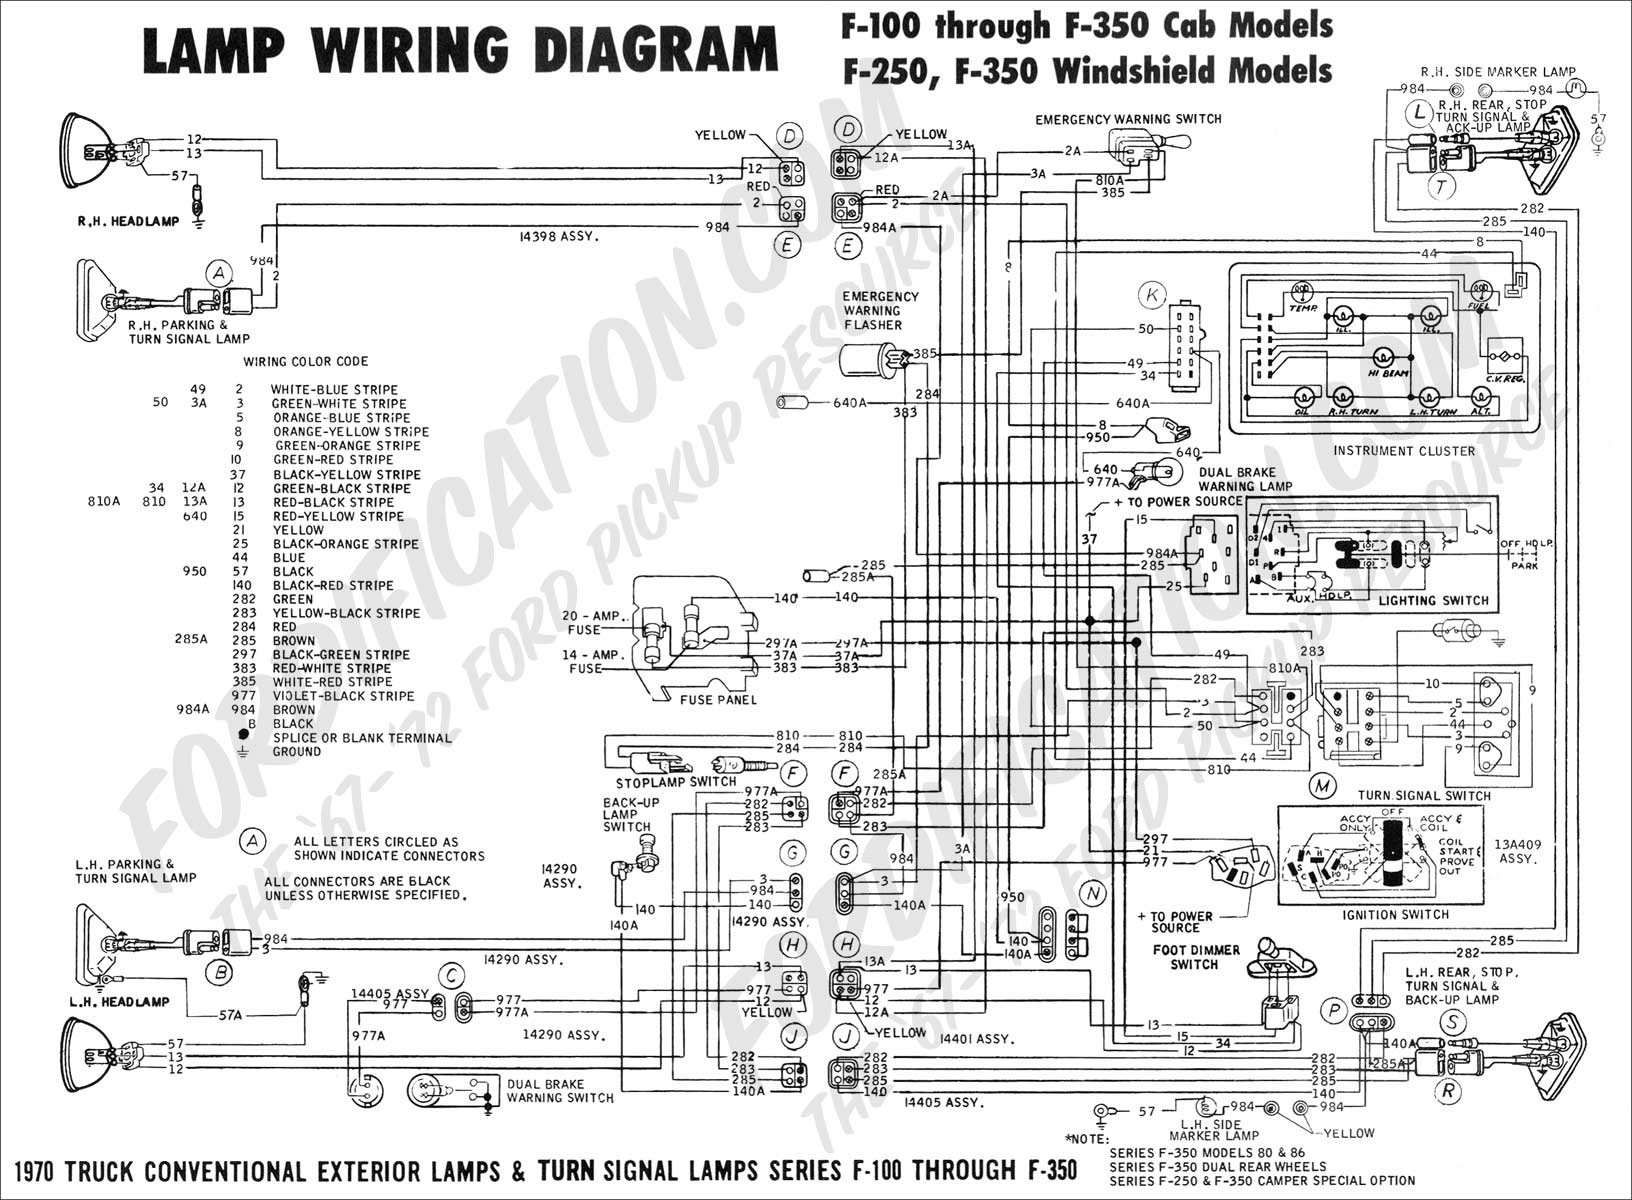 Freightliner Wiring Diagrams Free Free Wiring Diagrams Blurts Of Freightliner Wiring Diagrams Free